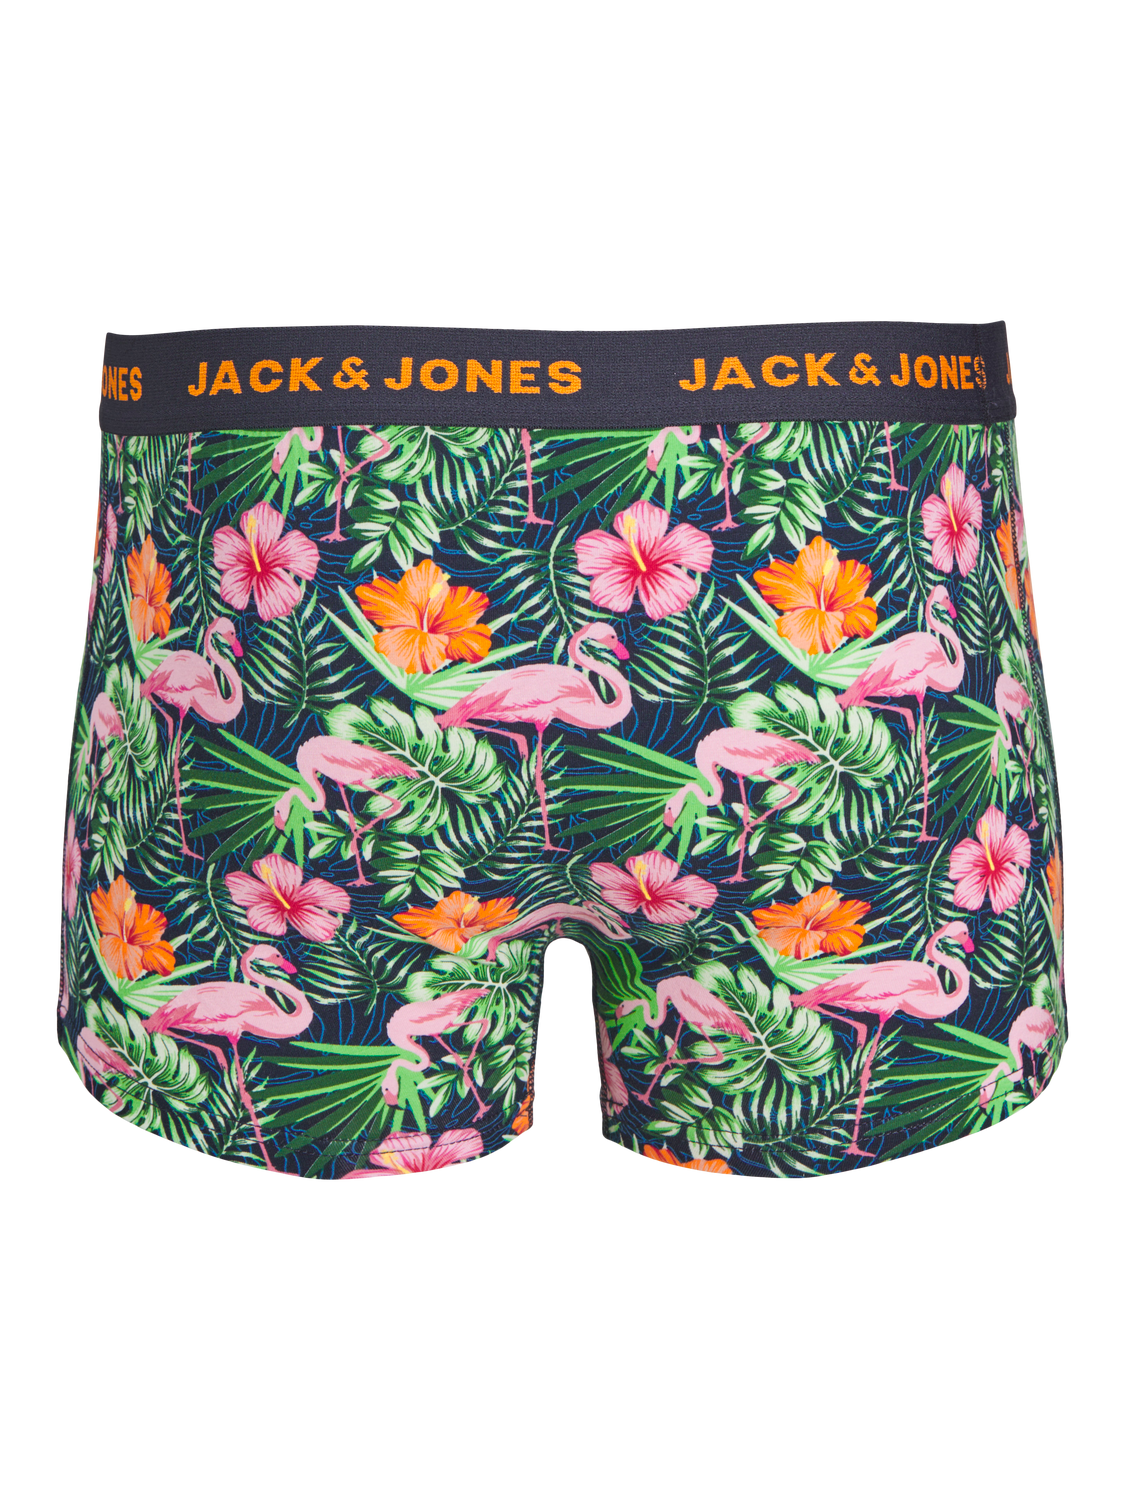 Jack & Jones 5er-pack Boxershorts -Navy Blazer - 12255851